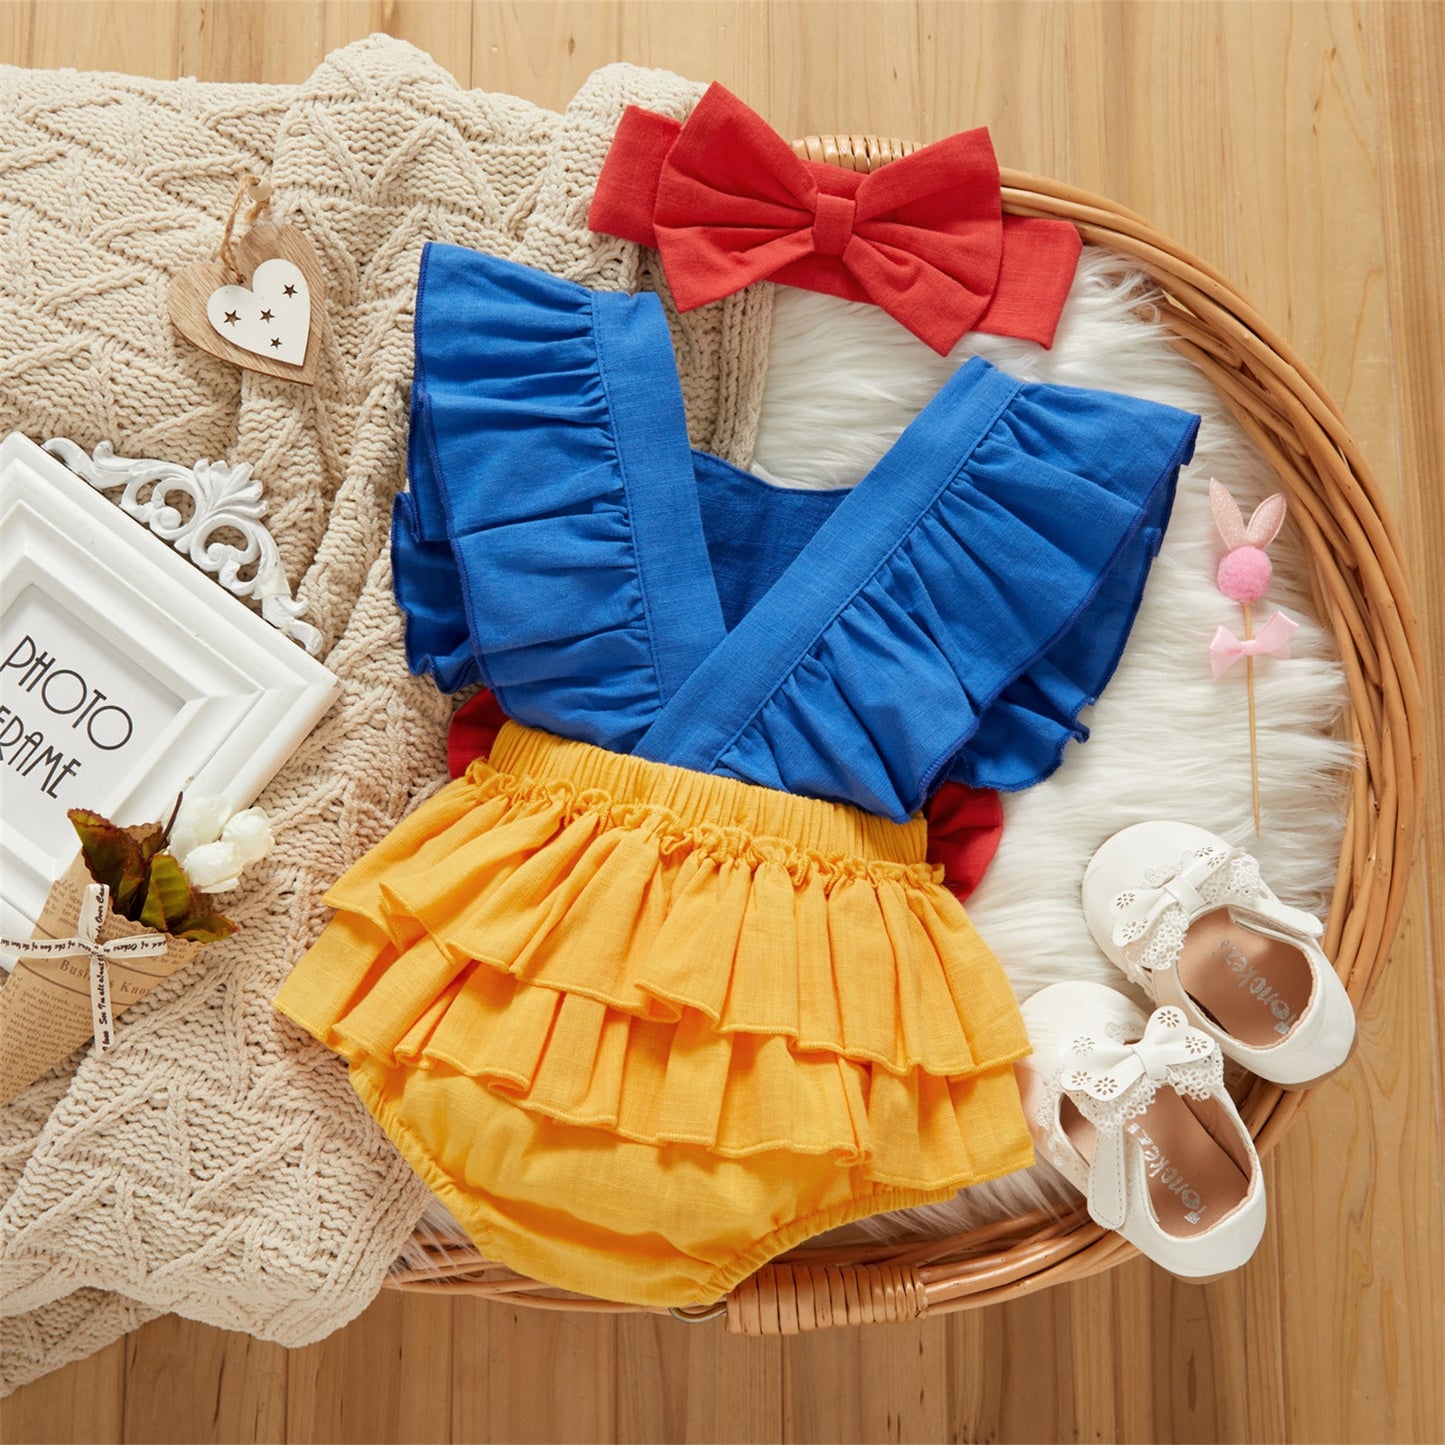 PatPat 100% Cotton 2pcs Letter Print Color Block Sleeveless Layered Ruffle Baby Princess Romper Set